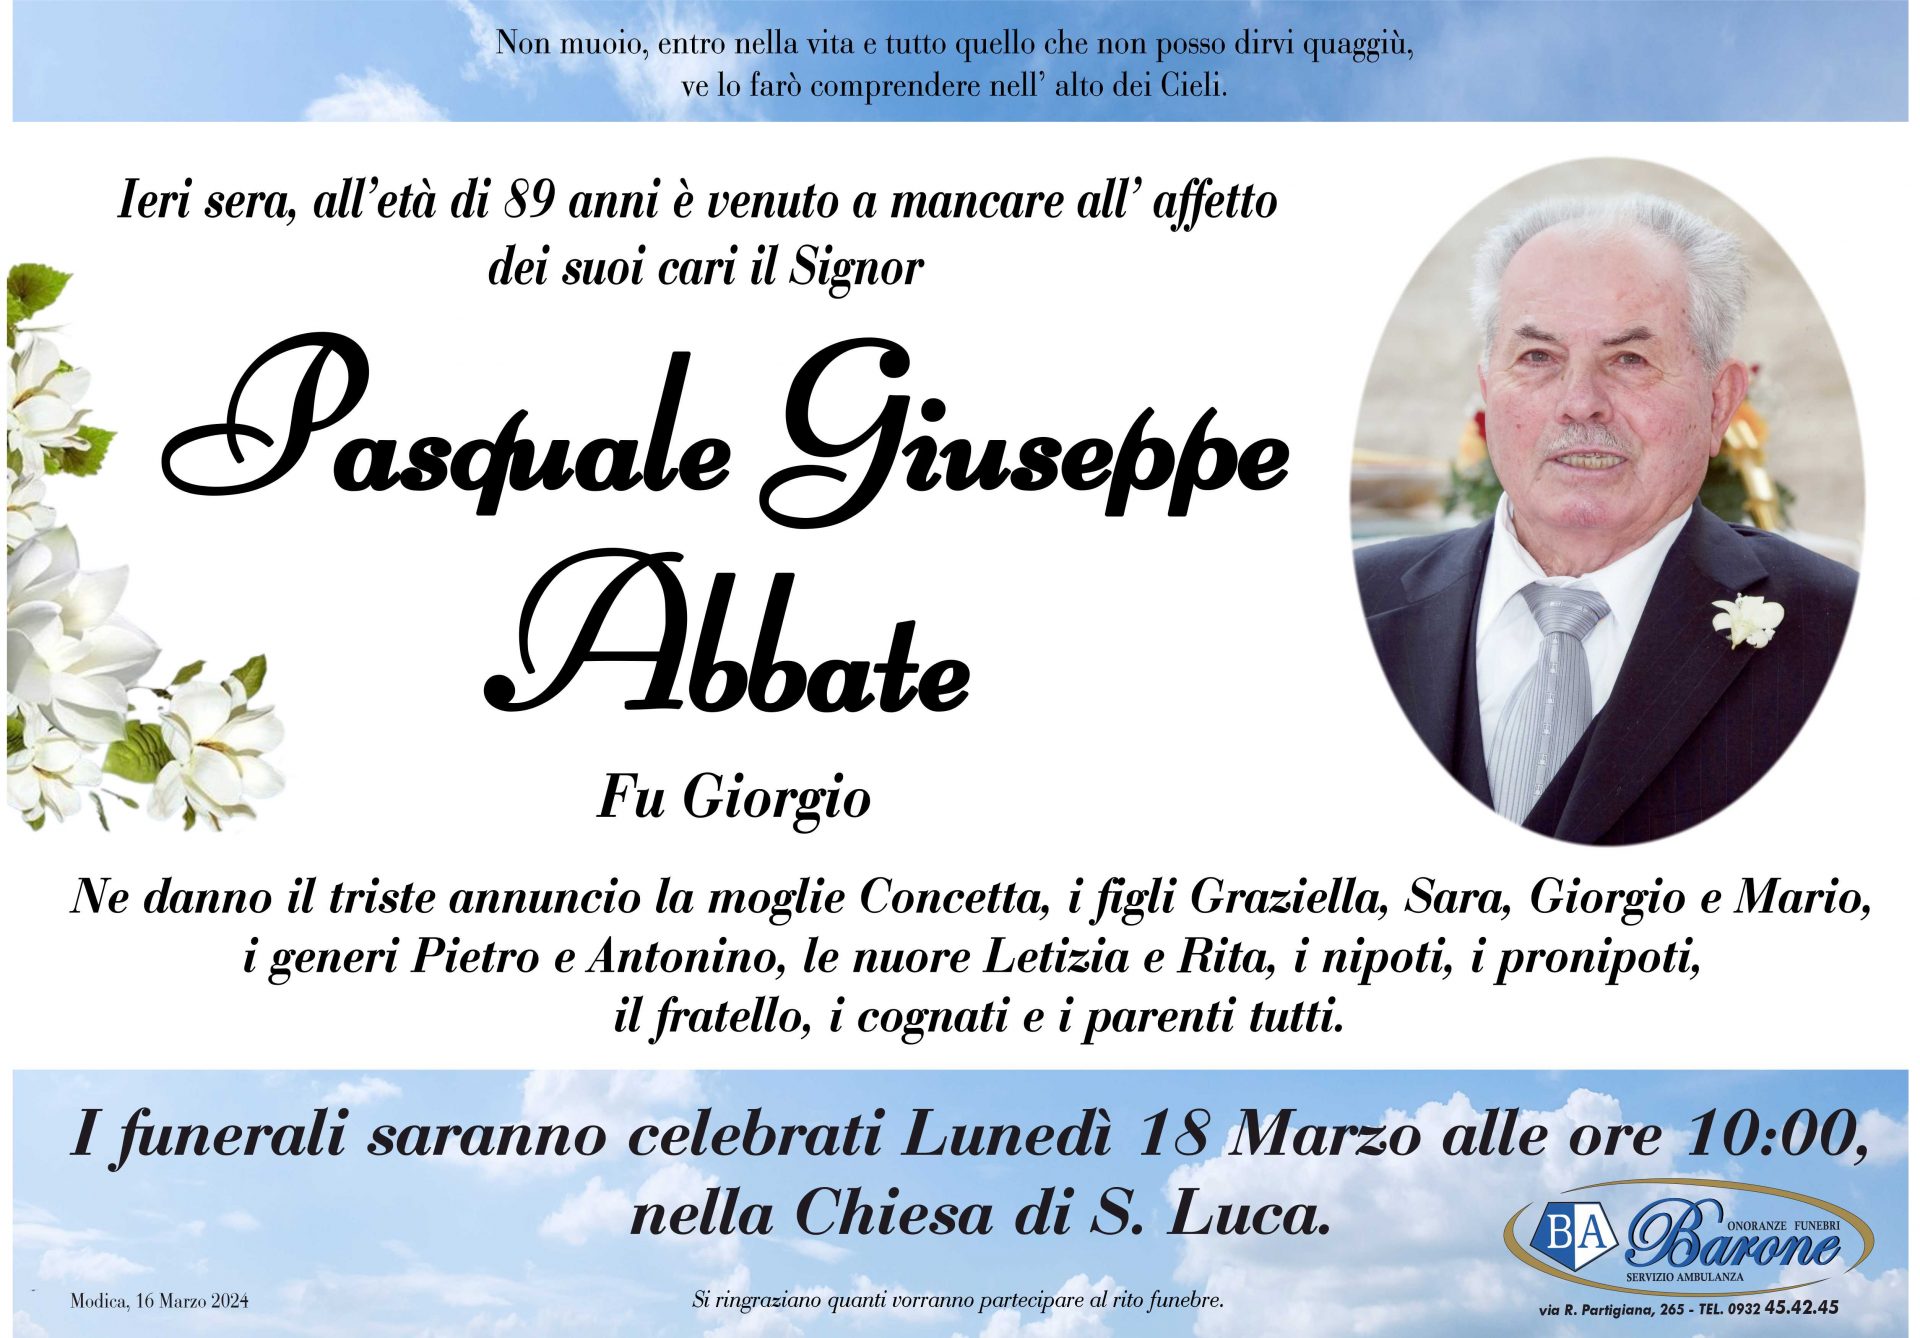 Pasquale Giuseppe Abbate